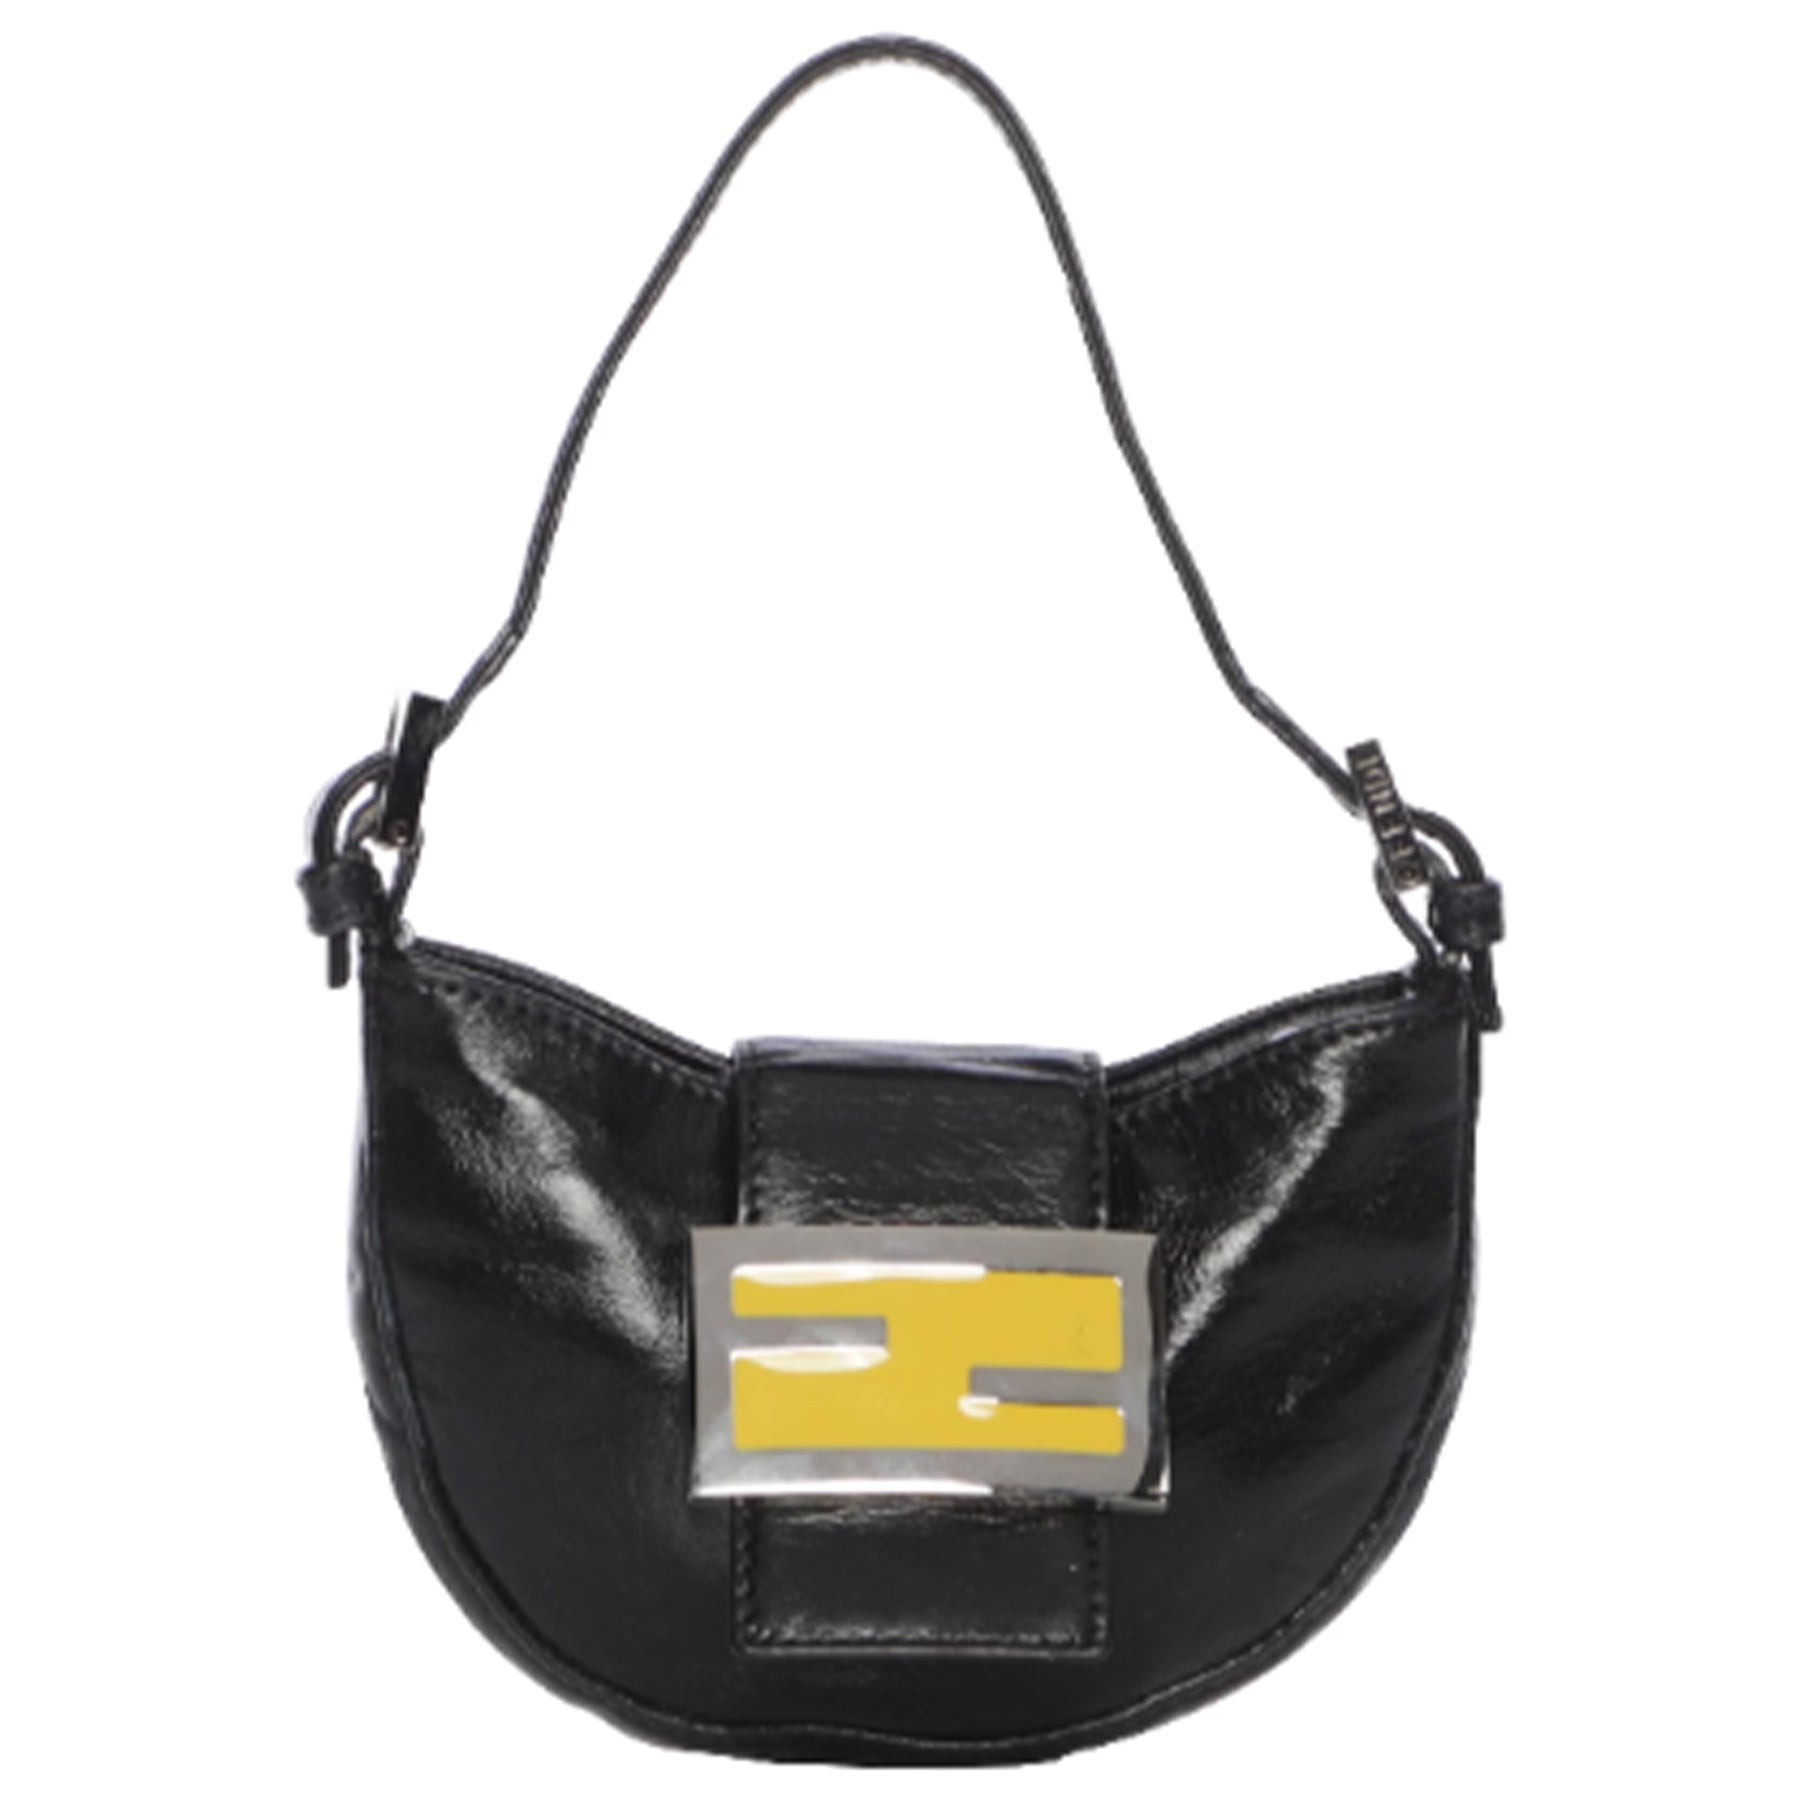 Women's Baguette Mini Bag, FENDI